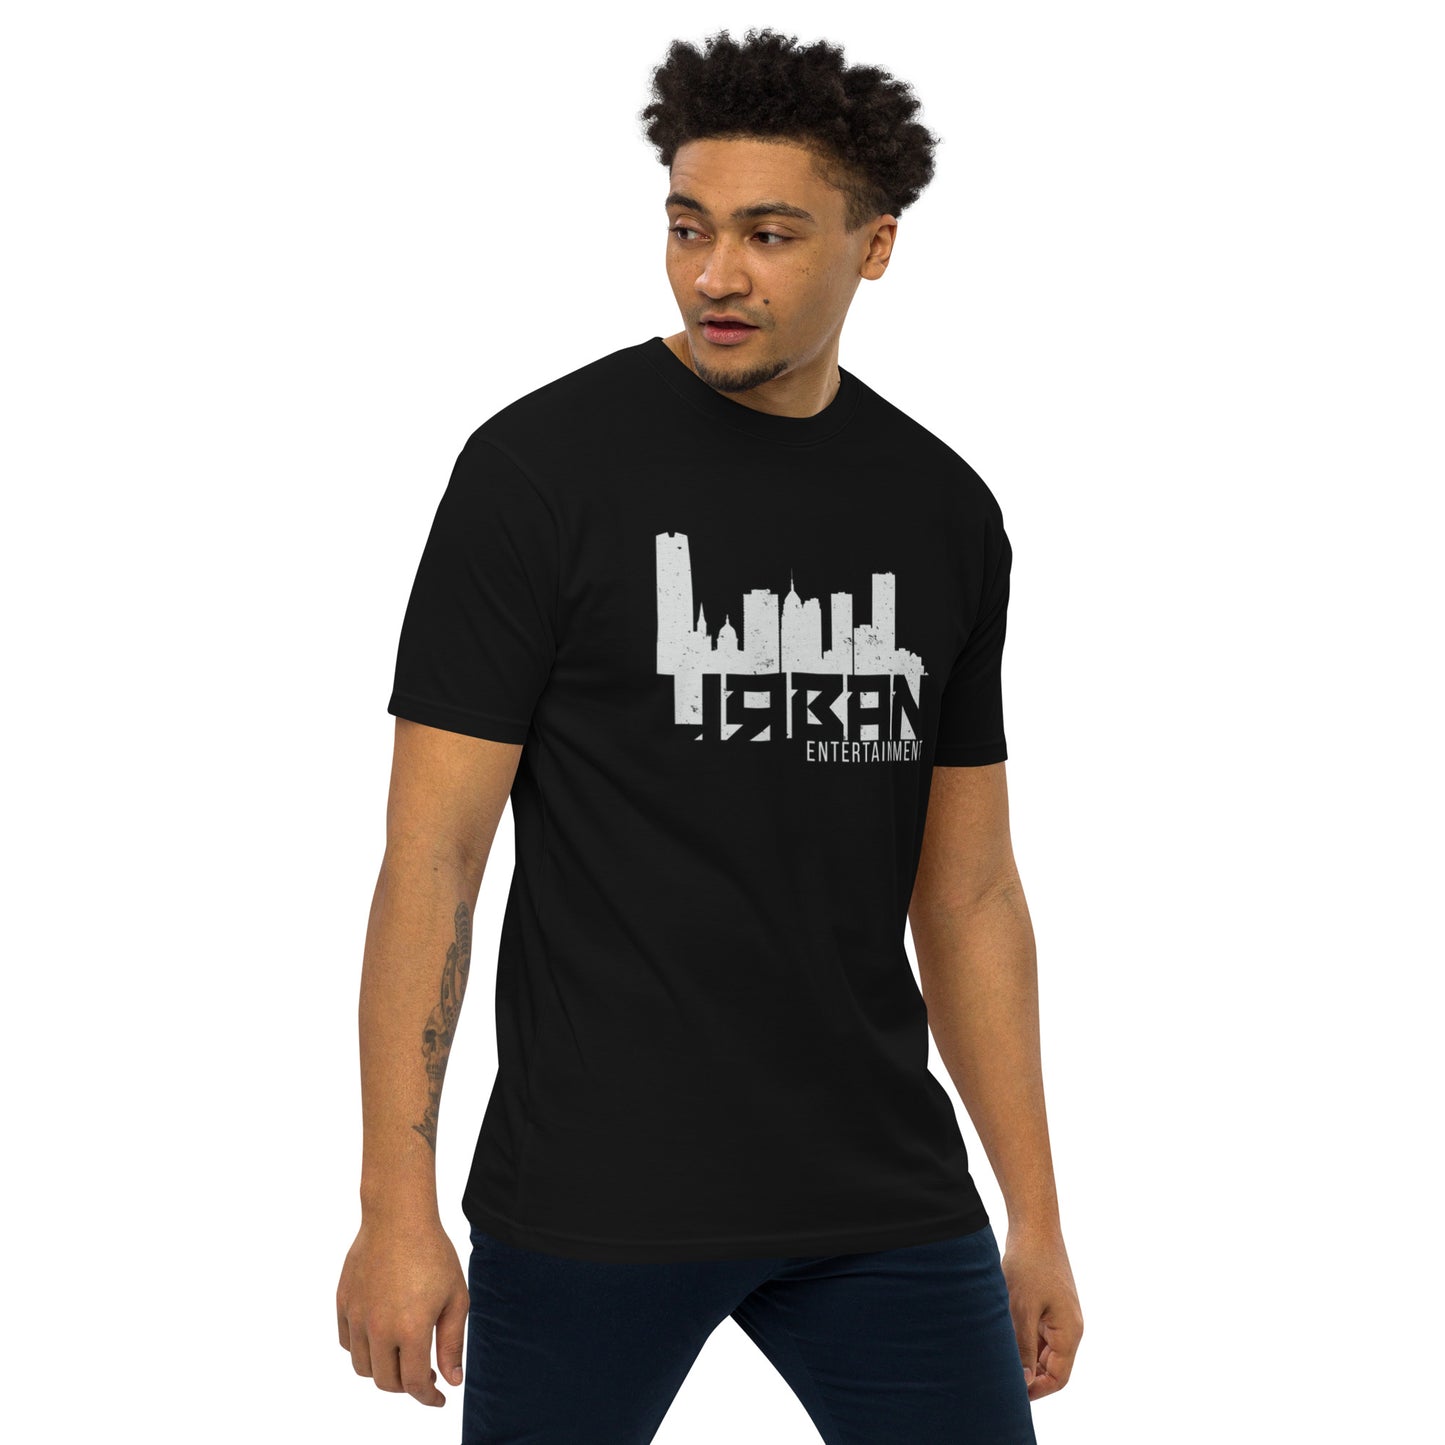 Urban Entertainment - Tee Shirt